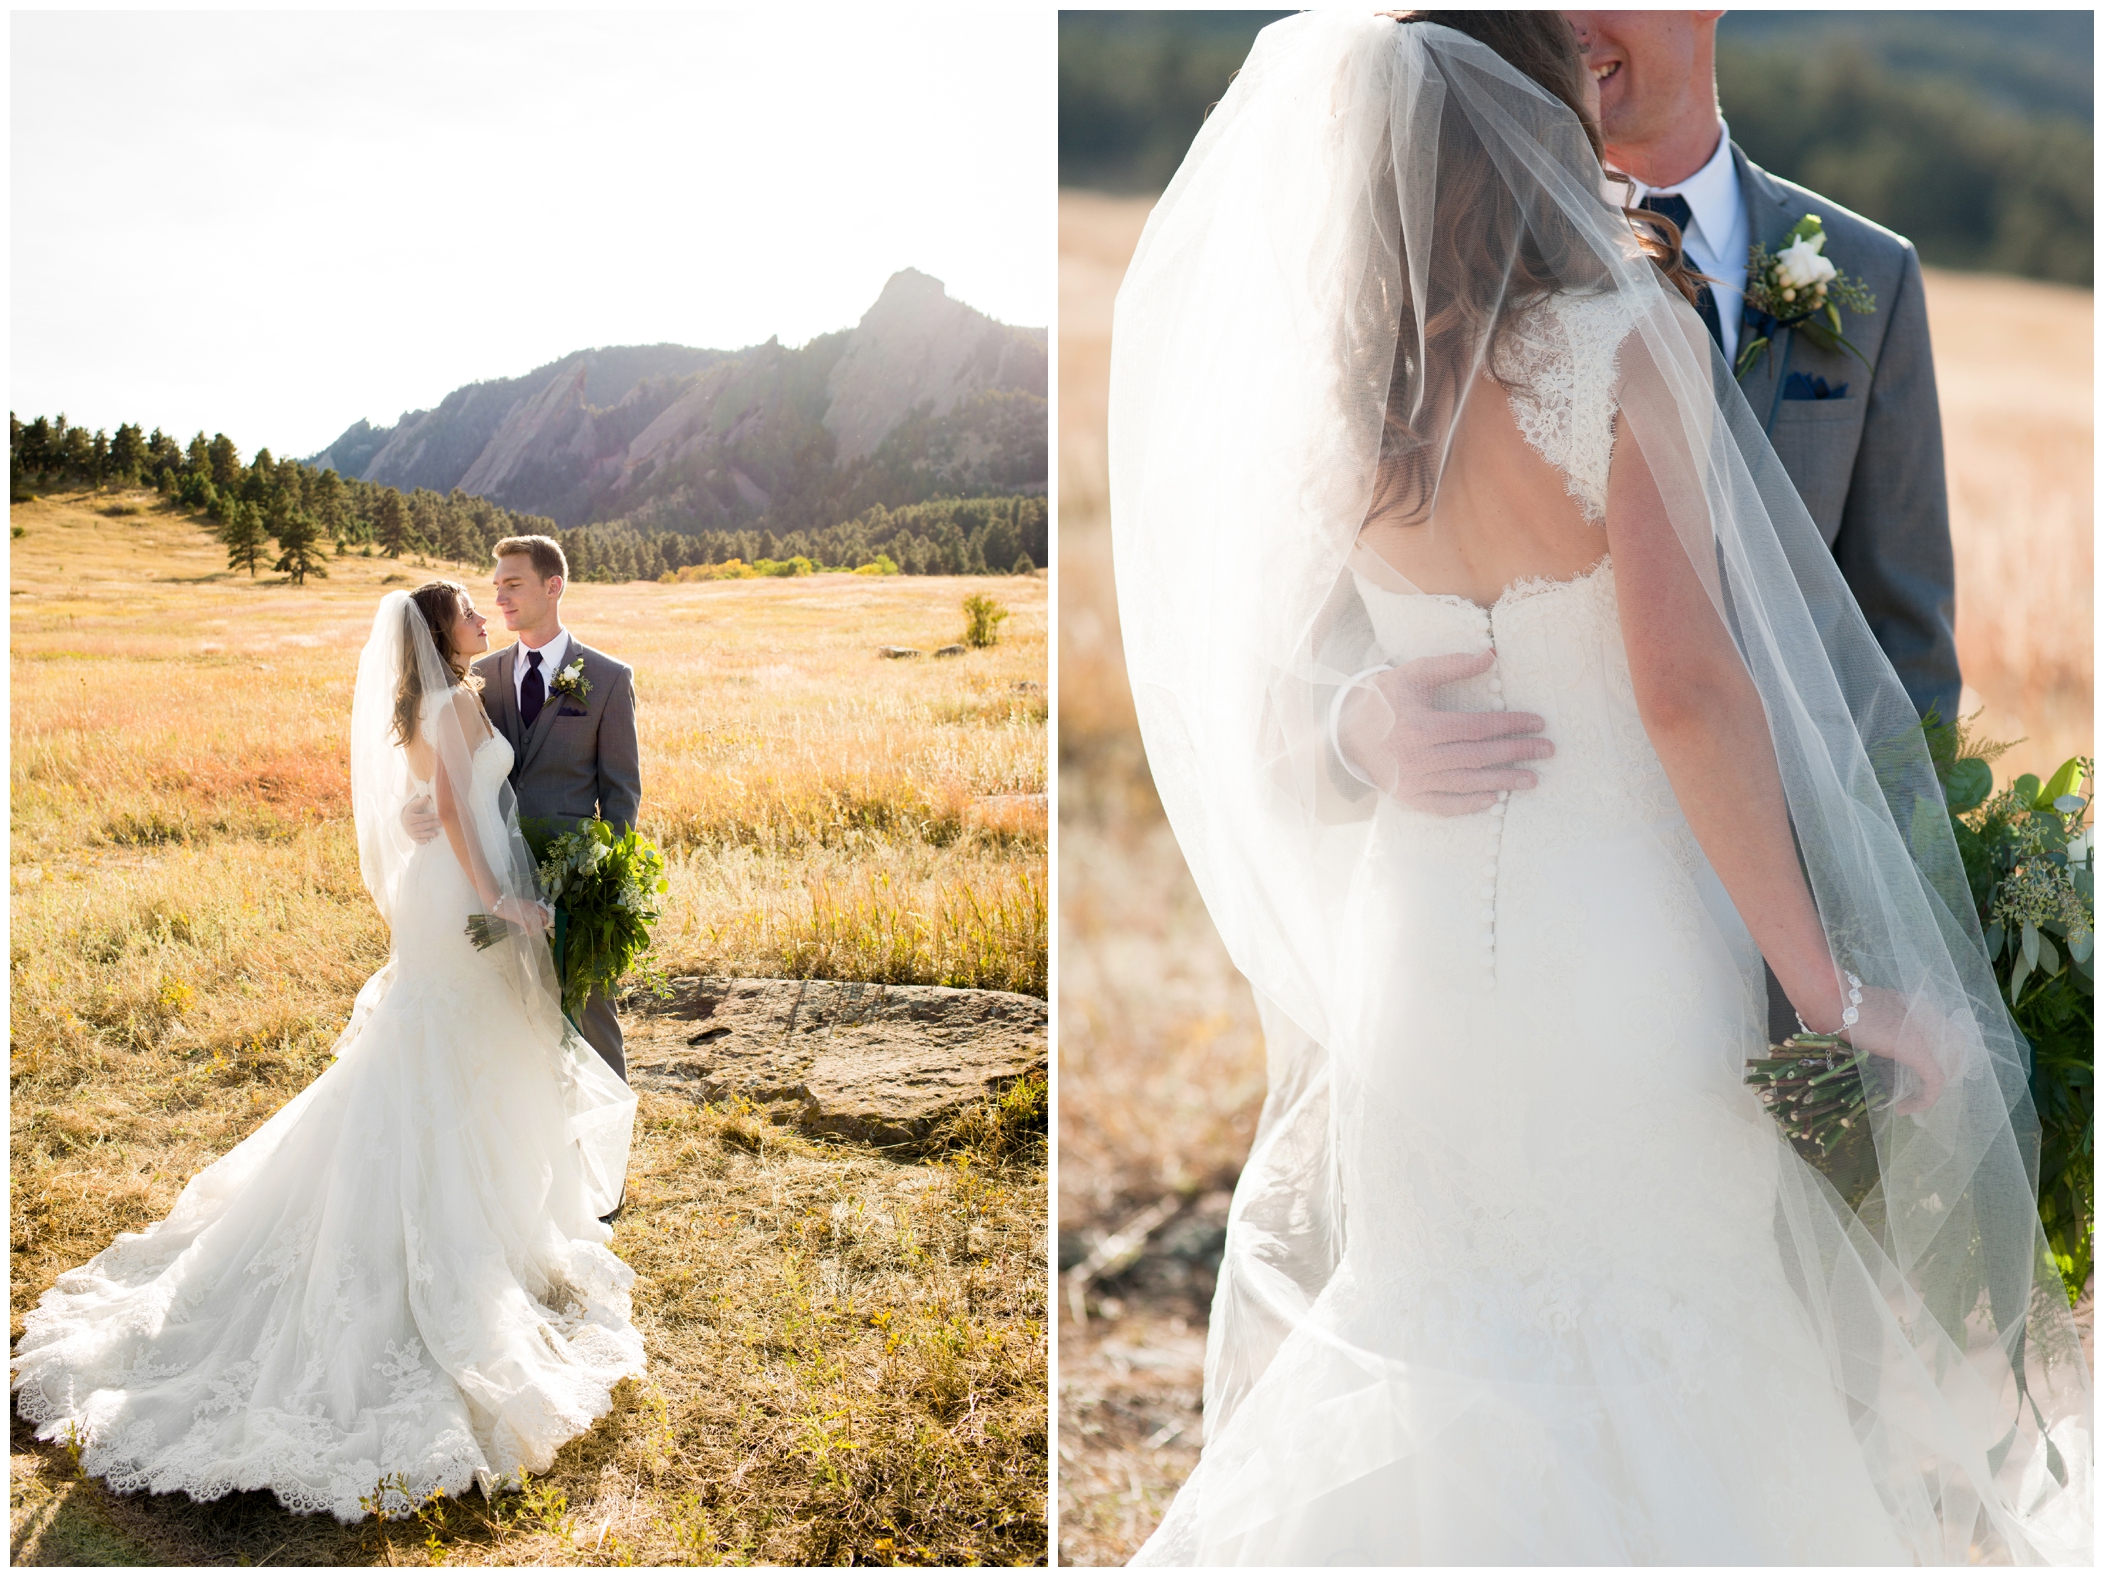 Chautauqua wedding photos by Boulder photographer Plum Pretty Photography 